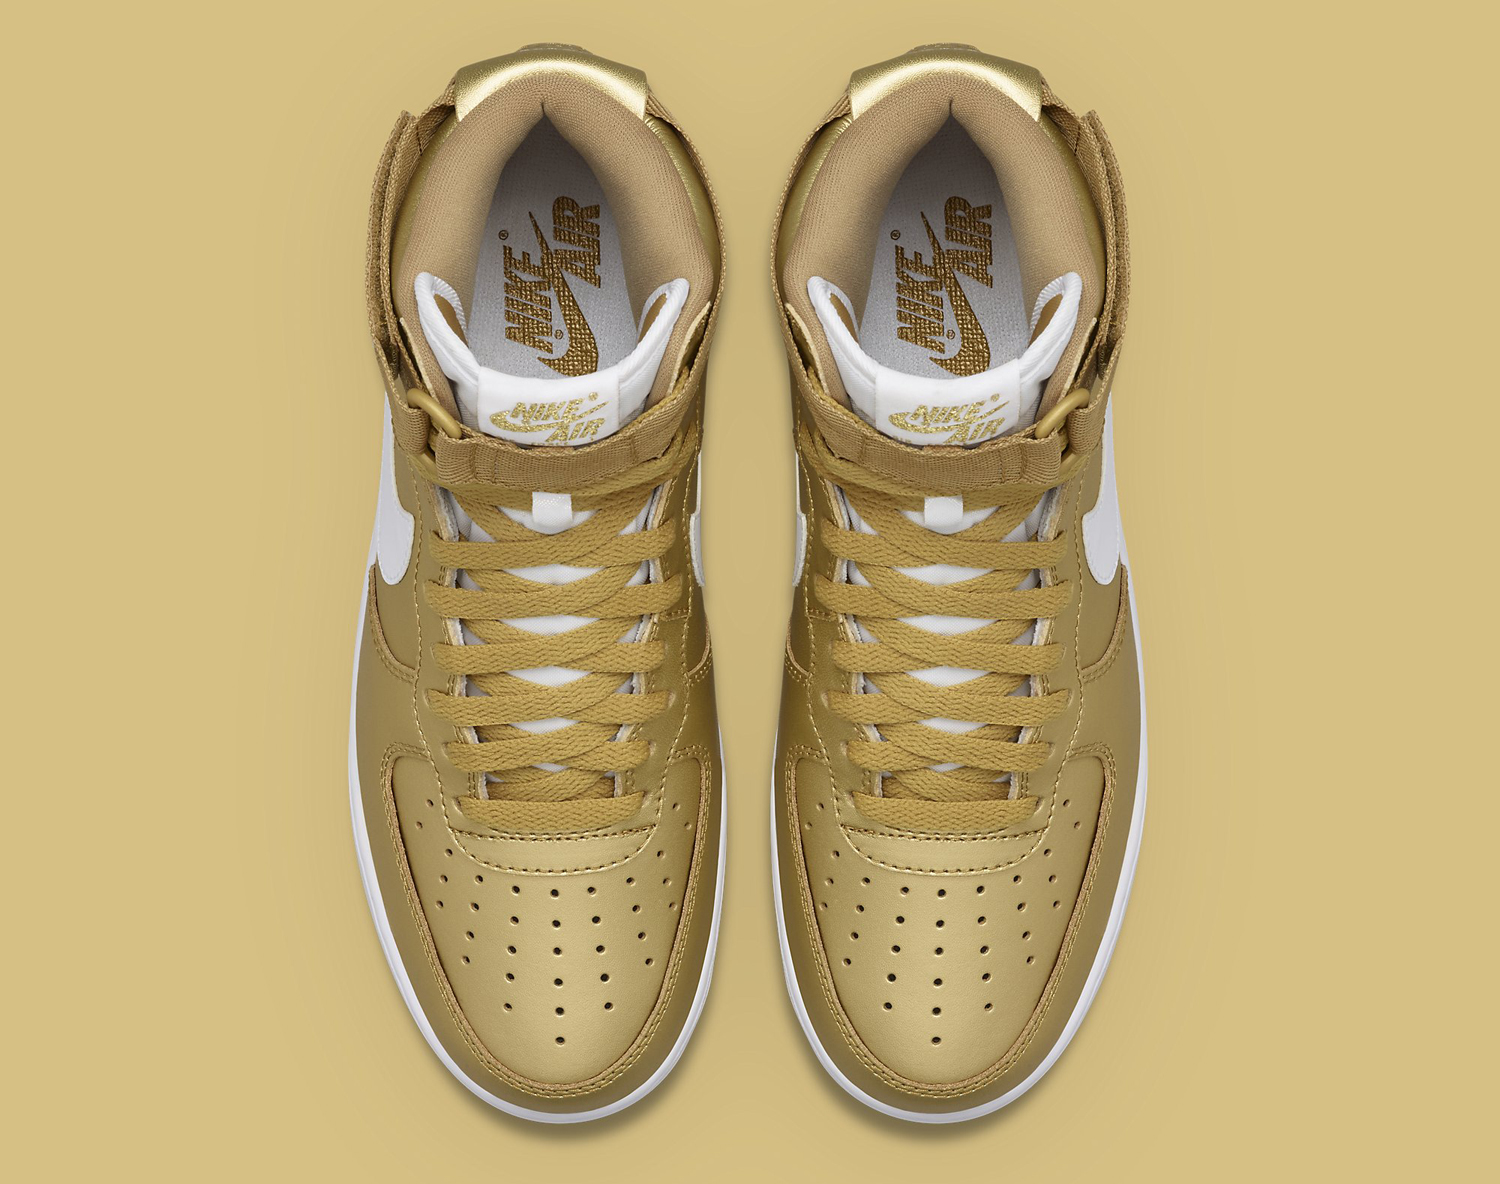 Nike Air Force 1 High Metallic Gold